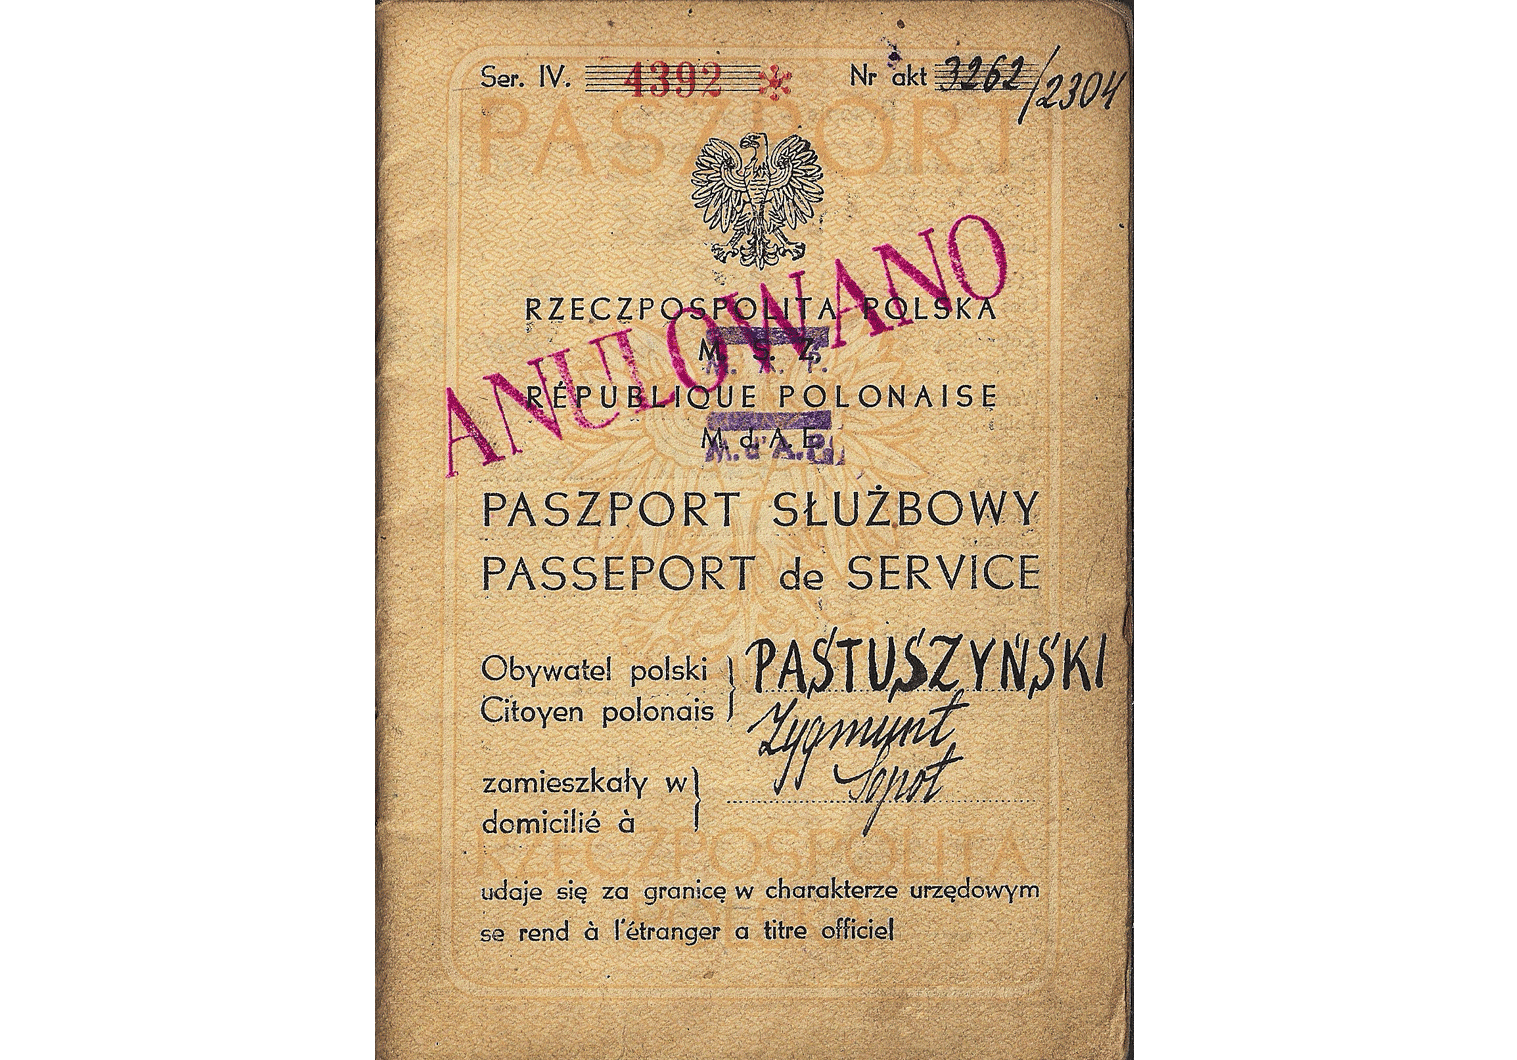 Polish service passport from 1949